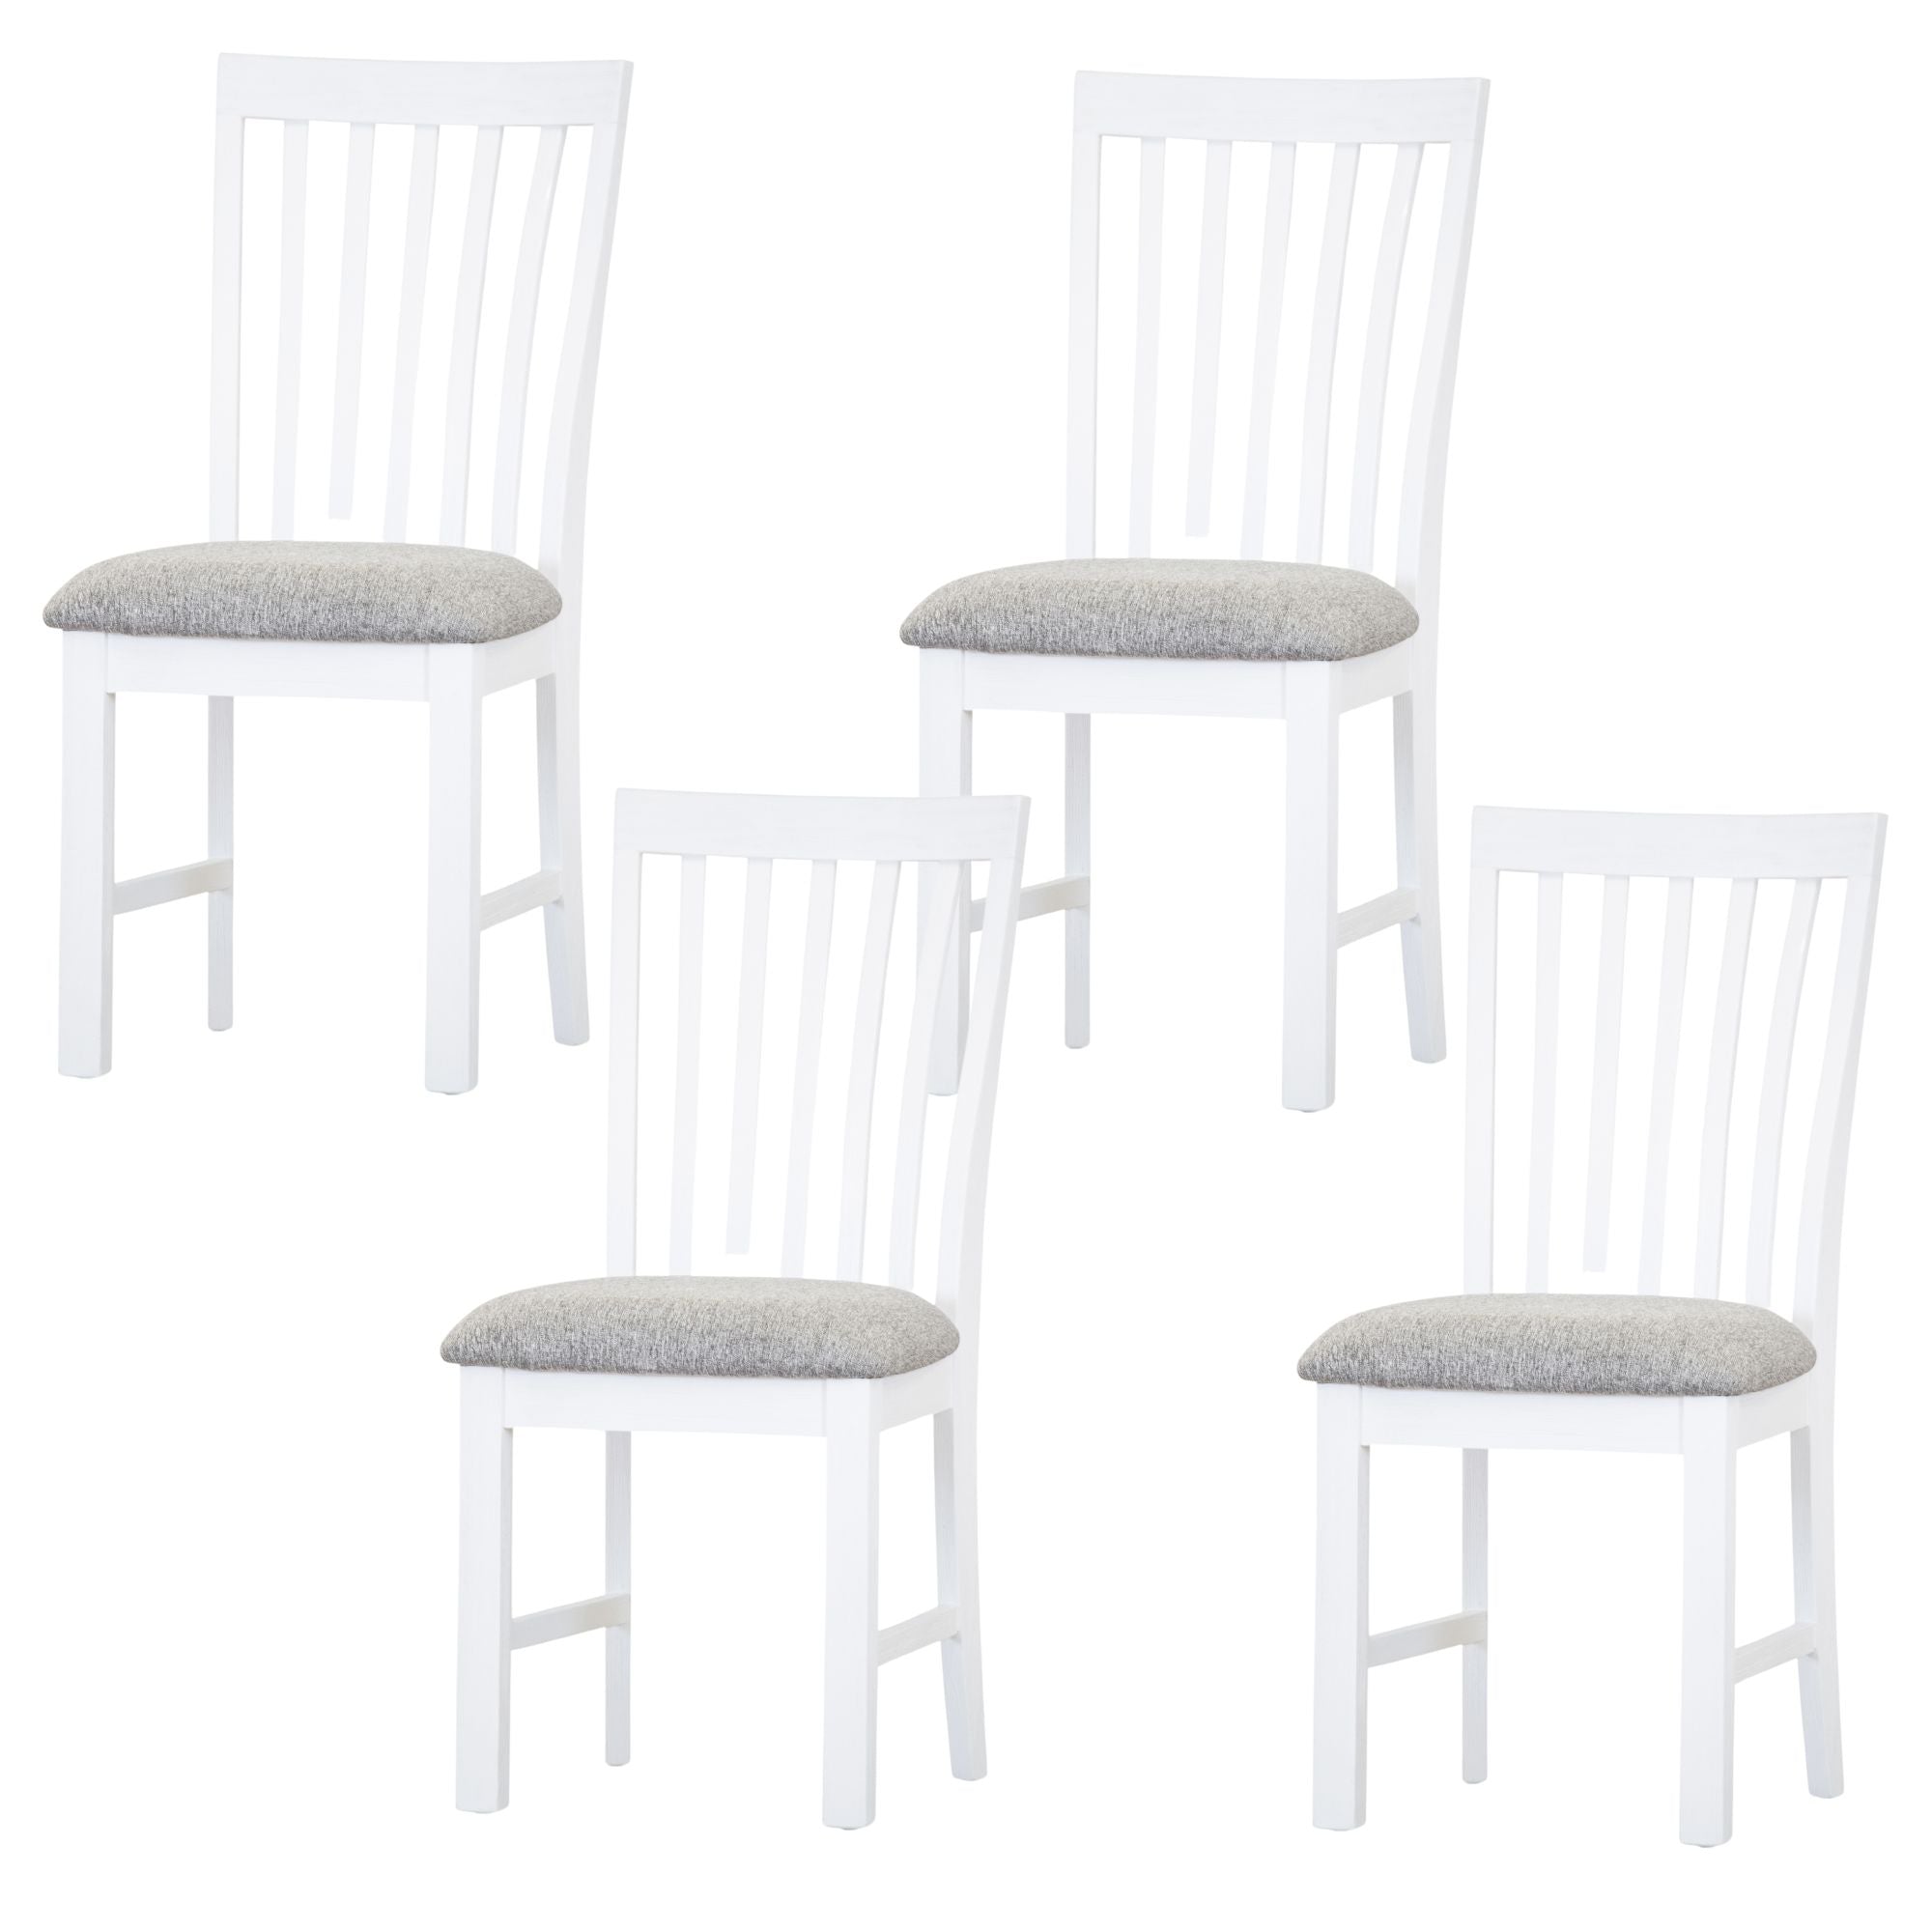 laelia-dining-chair-set-of-4-solid-acacia-timber-wood-coastal-furniture-white